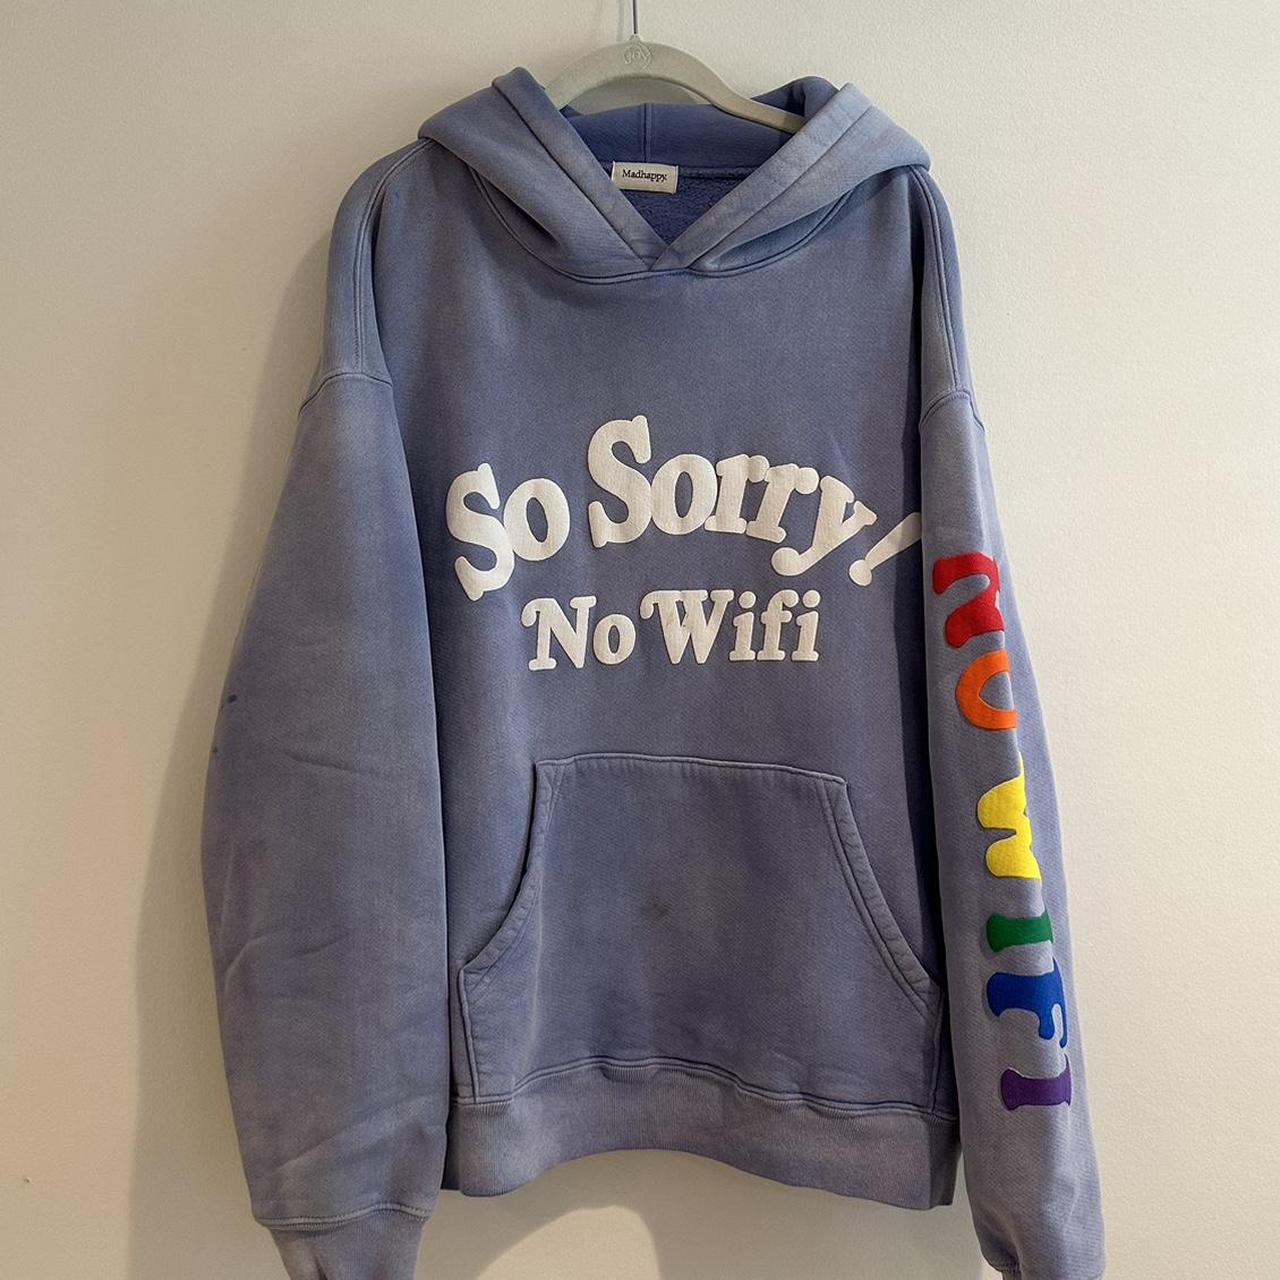 Madhappy “So Sorry, No Wifi” Sweatshirt - Depop